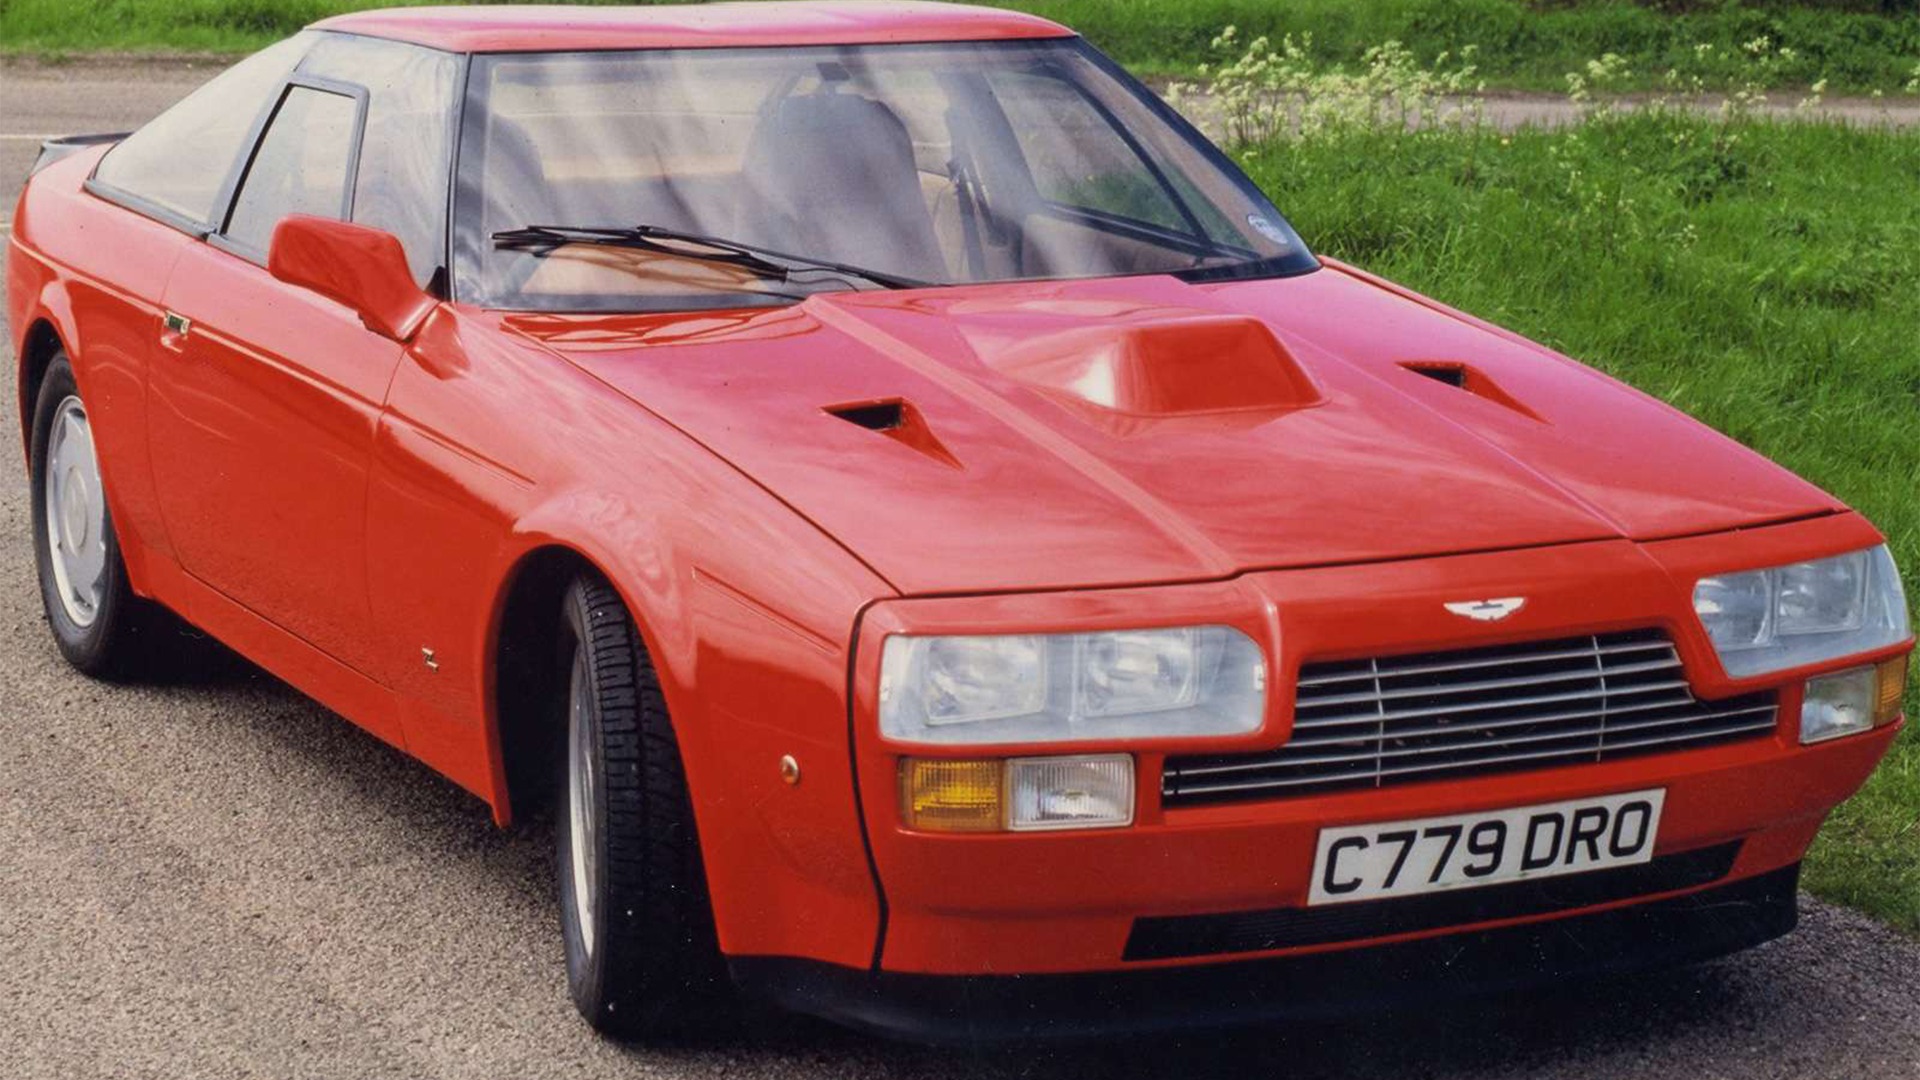 Lordens Garasje ep.158 – 25 coupeer fra 80-tallet